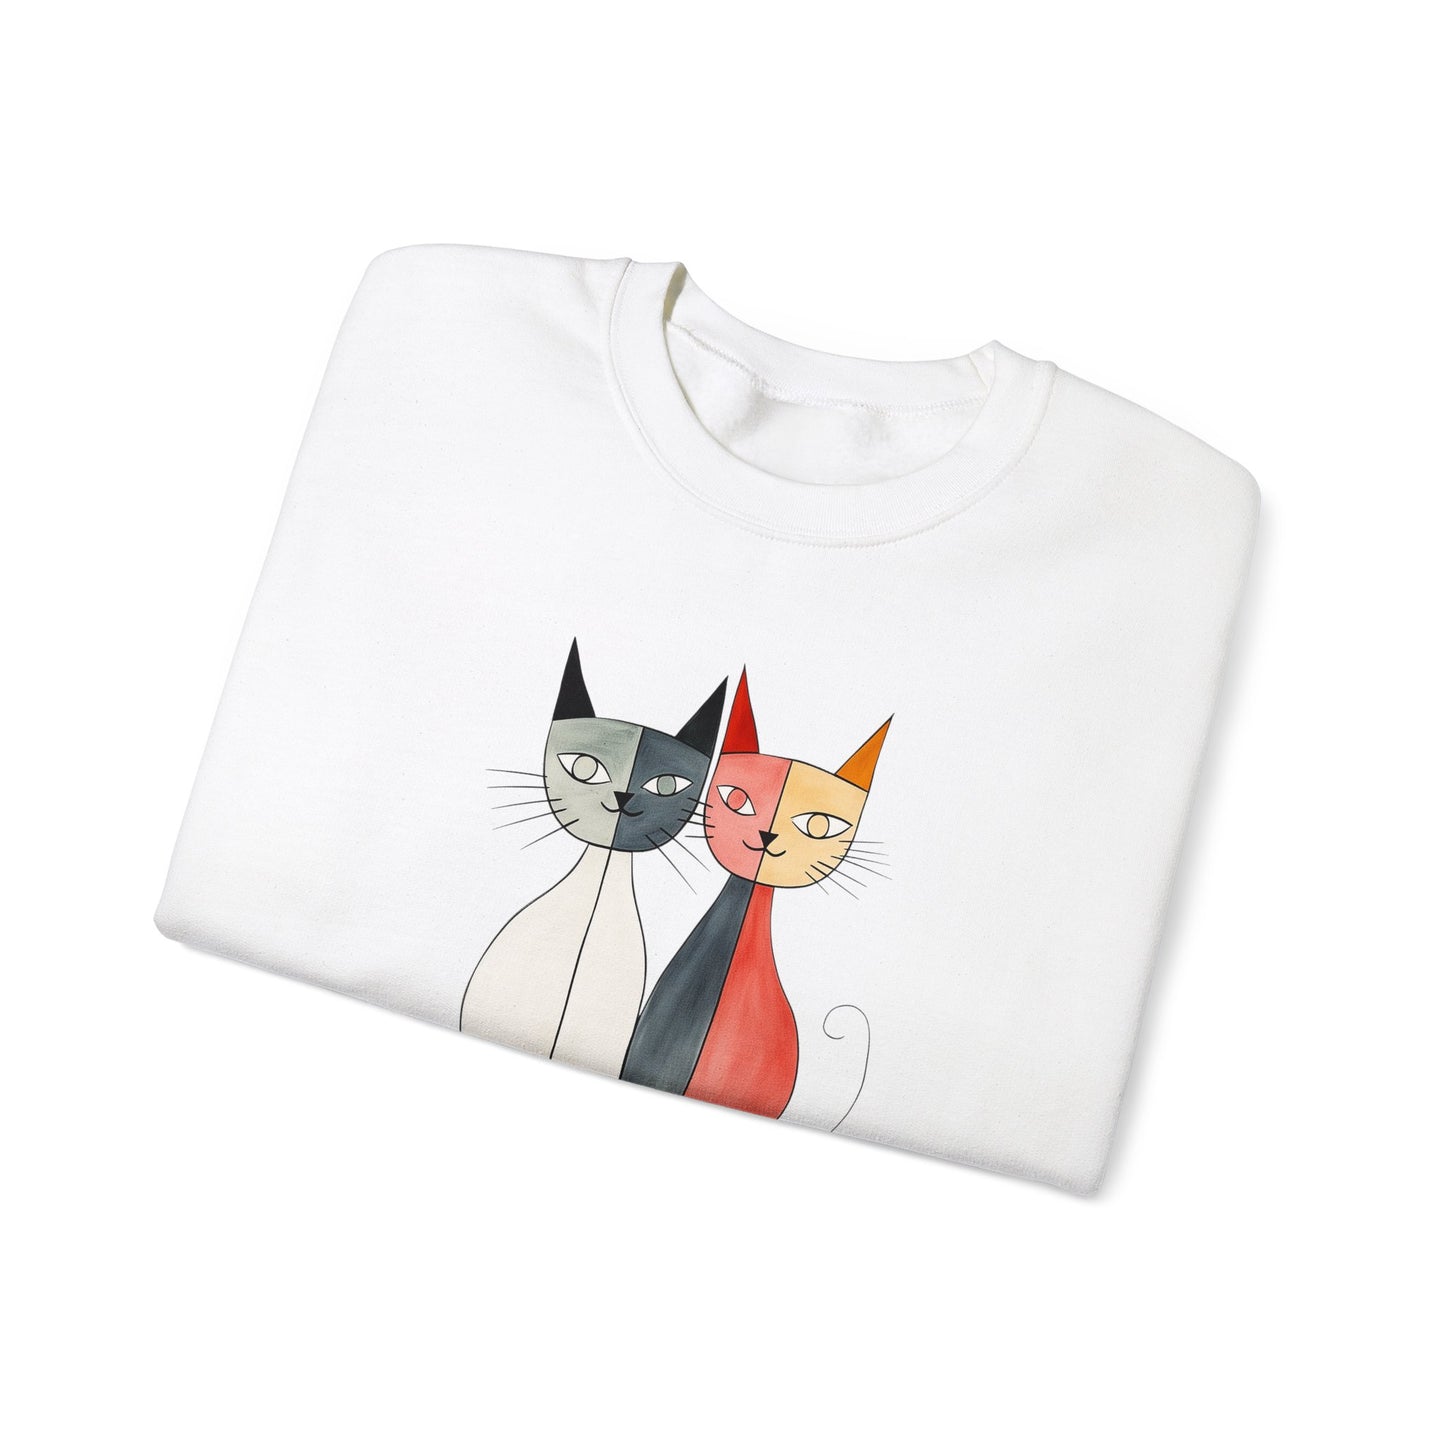 Atomic Cat Sweatshirt, Mid Century Modern Cat Style Design, Atomic Cat Shirt